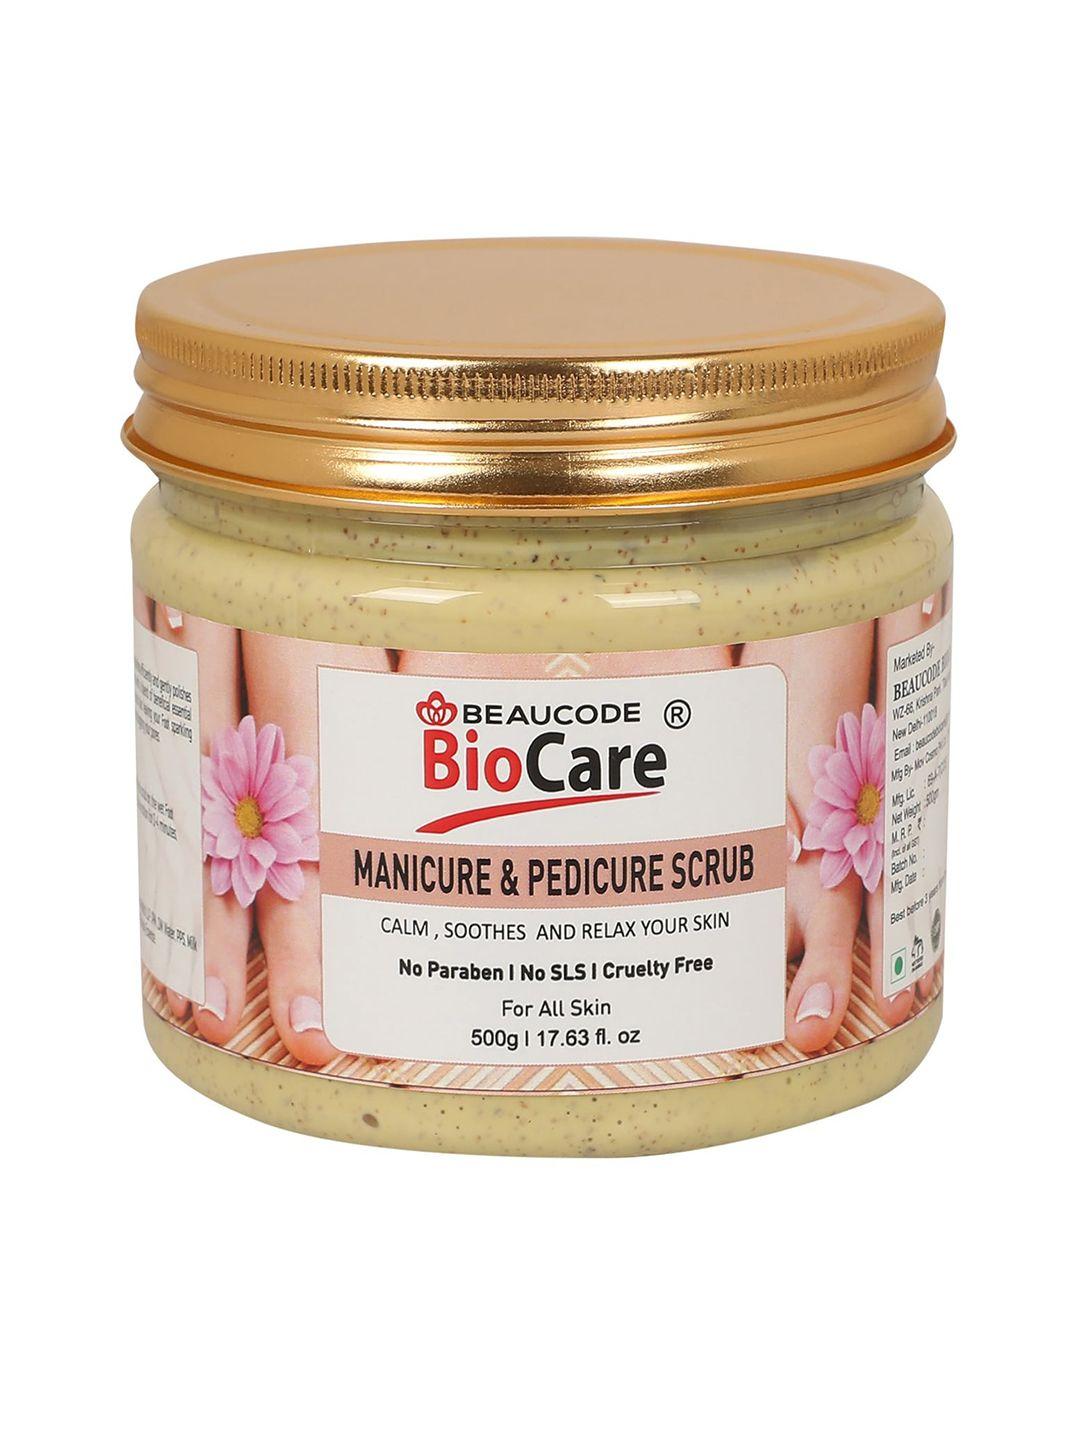 beaucode biocare manicure & pedicure scrub for all skin types - 500g